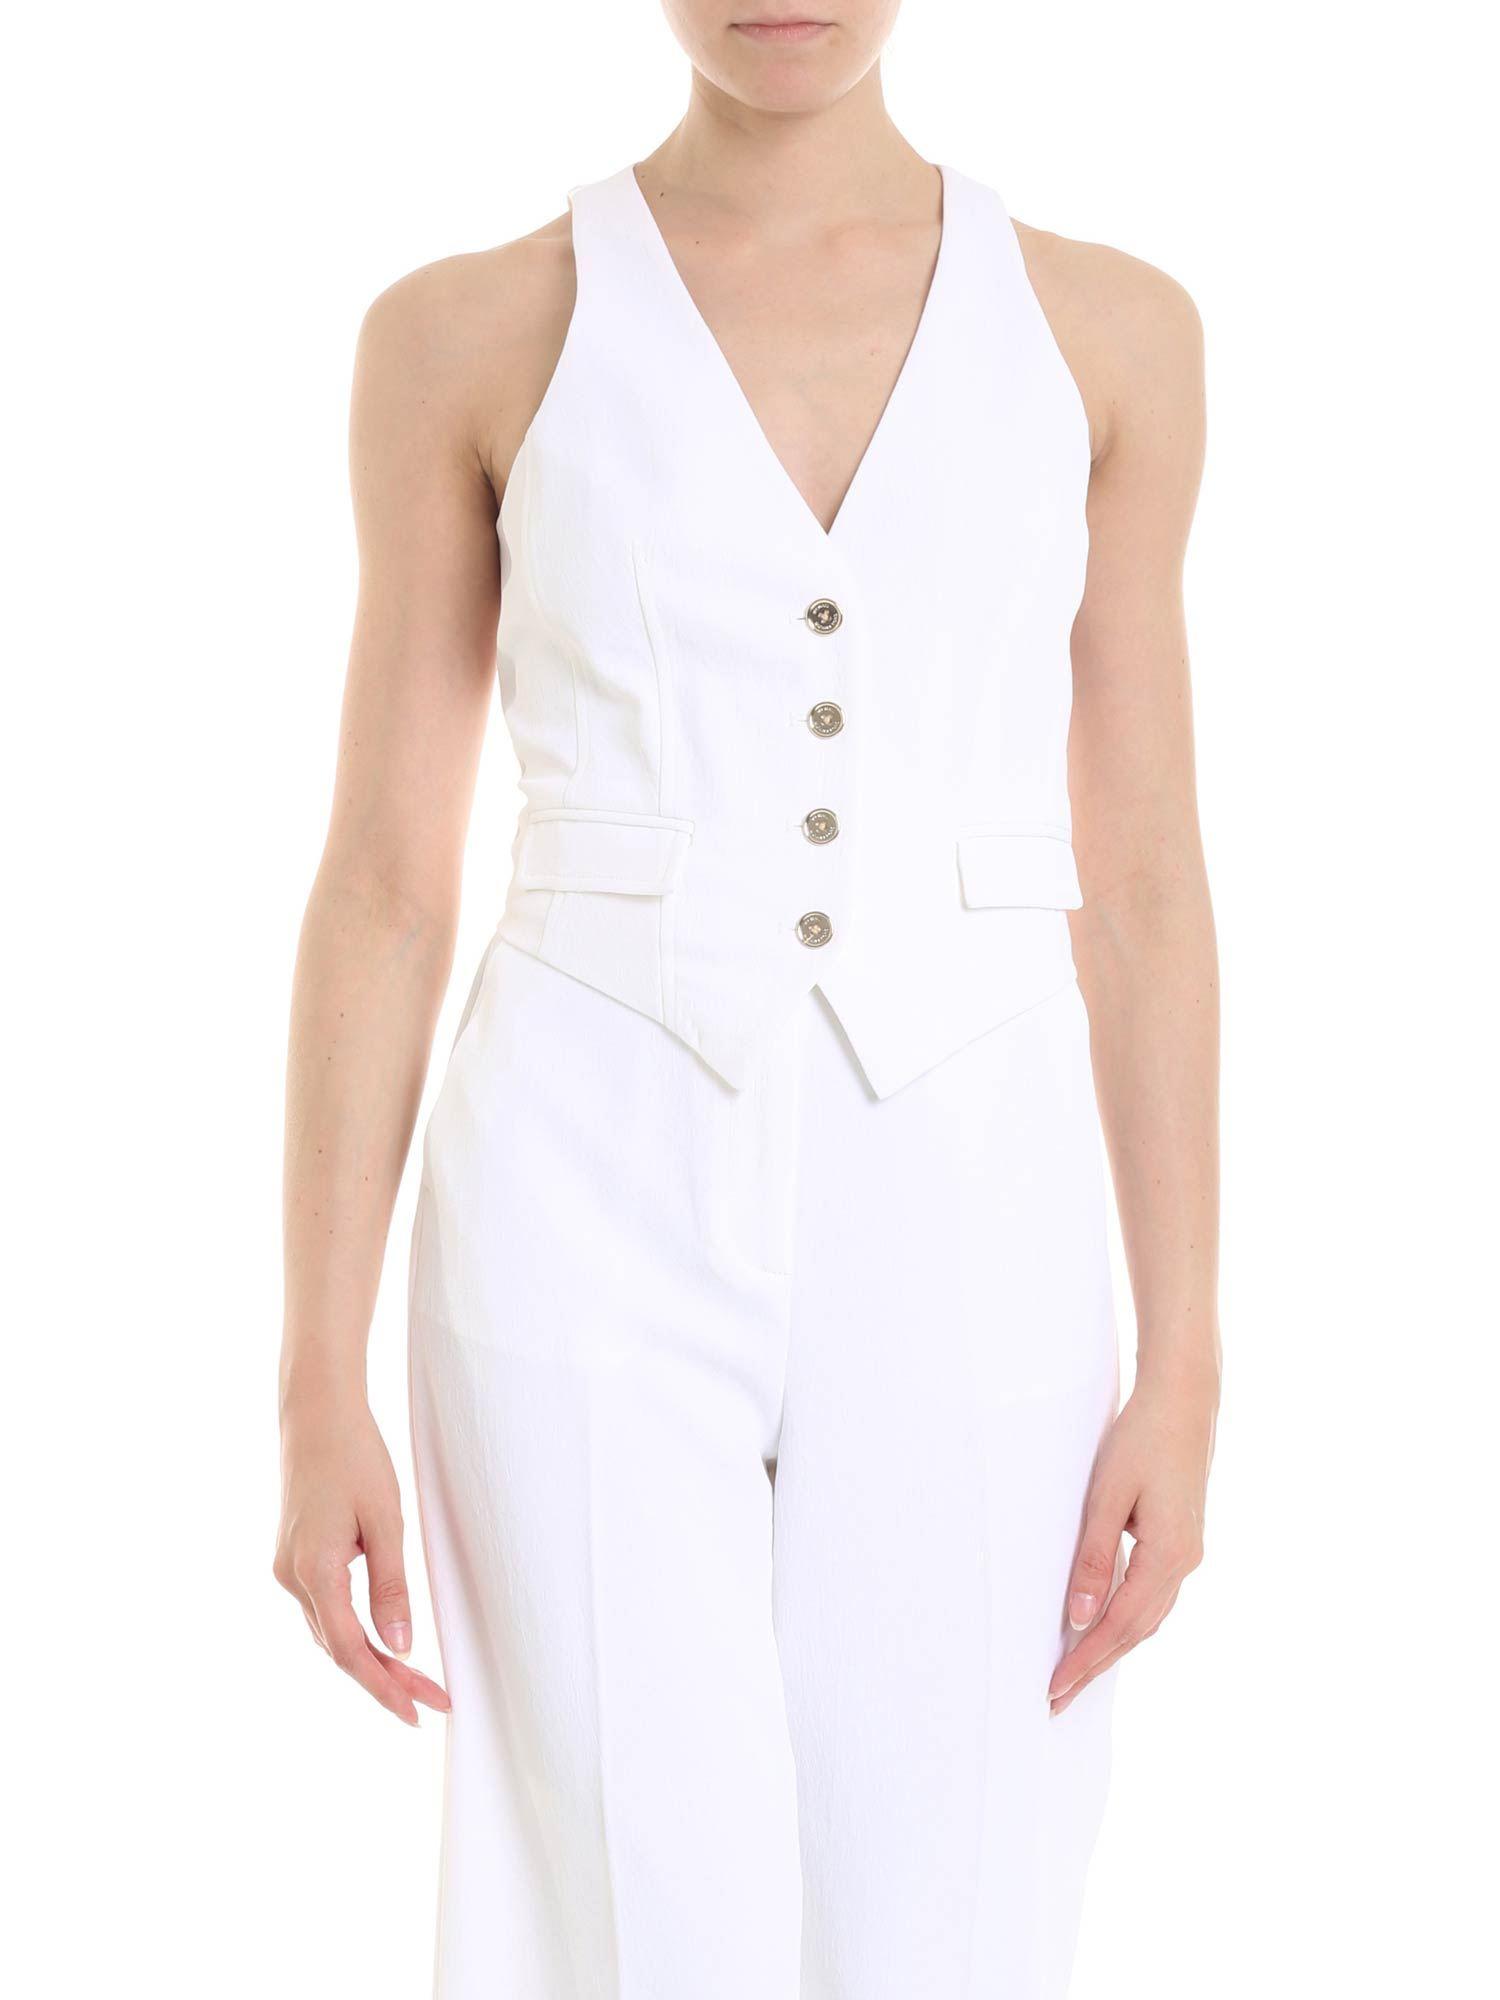 Michael Kors Synthetic White Vest In 